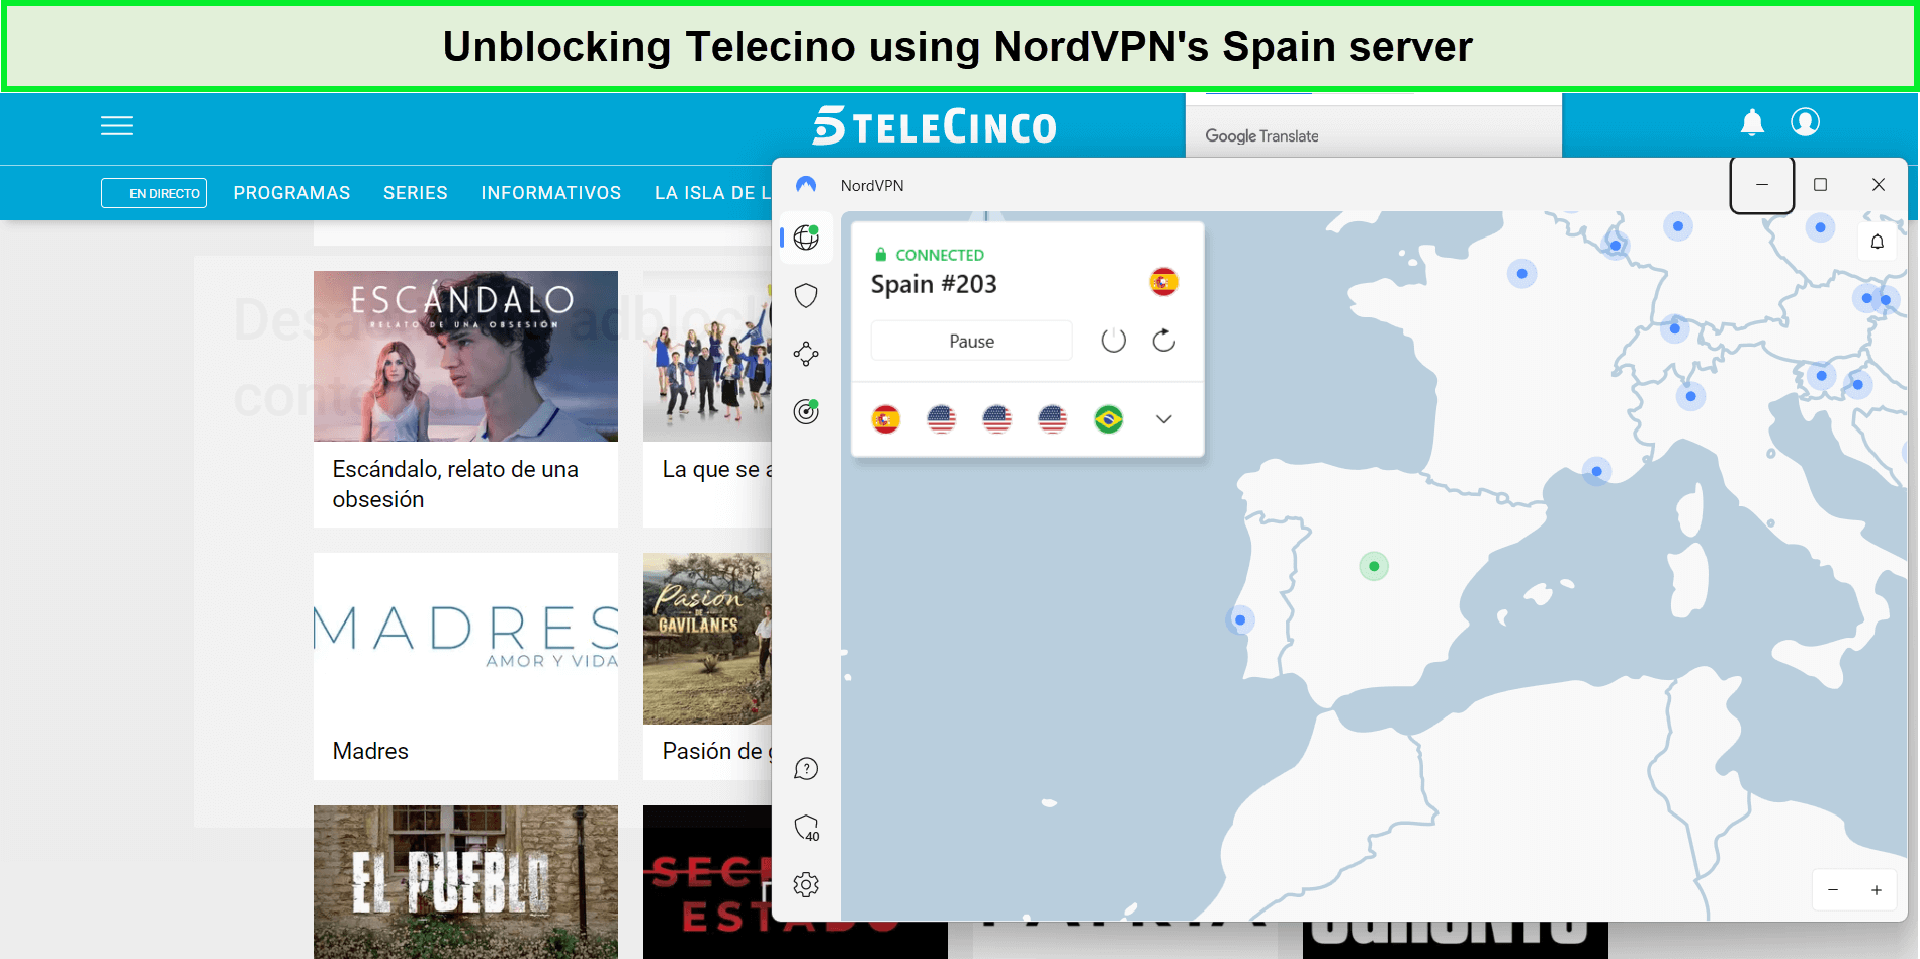 nordvpn-unblocked-telecinco-with-spanish-server-in-Germany